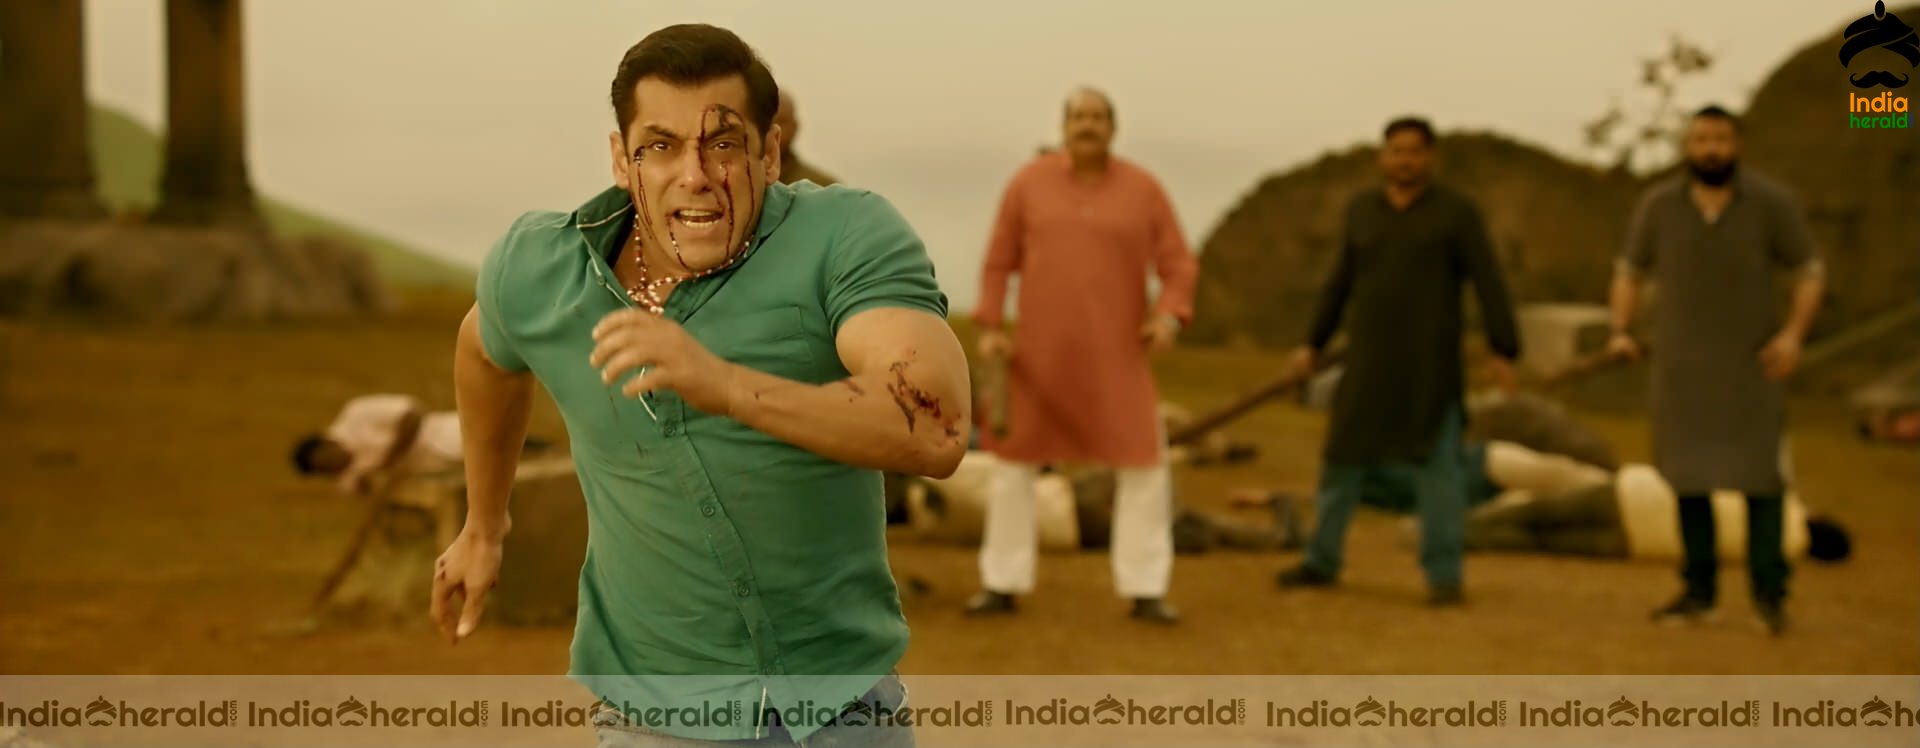 Salman Khan in Dabaang 3 Trailer HD Stills Set 2